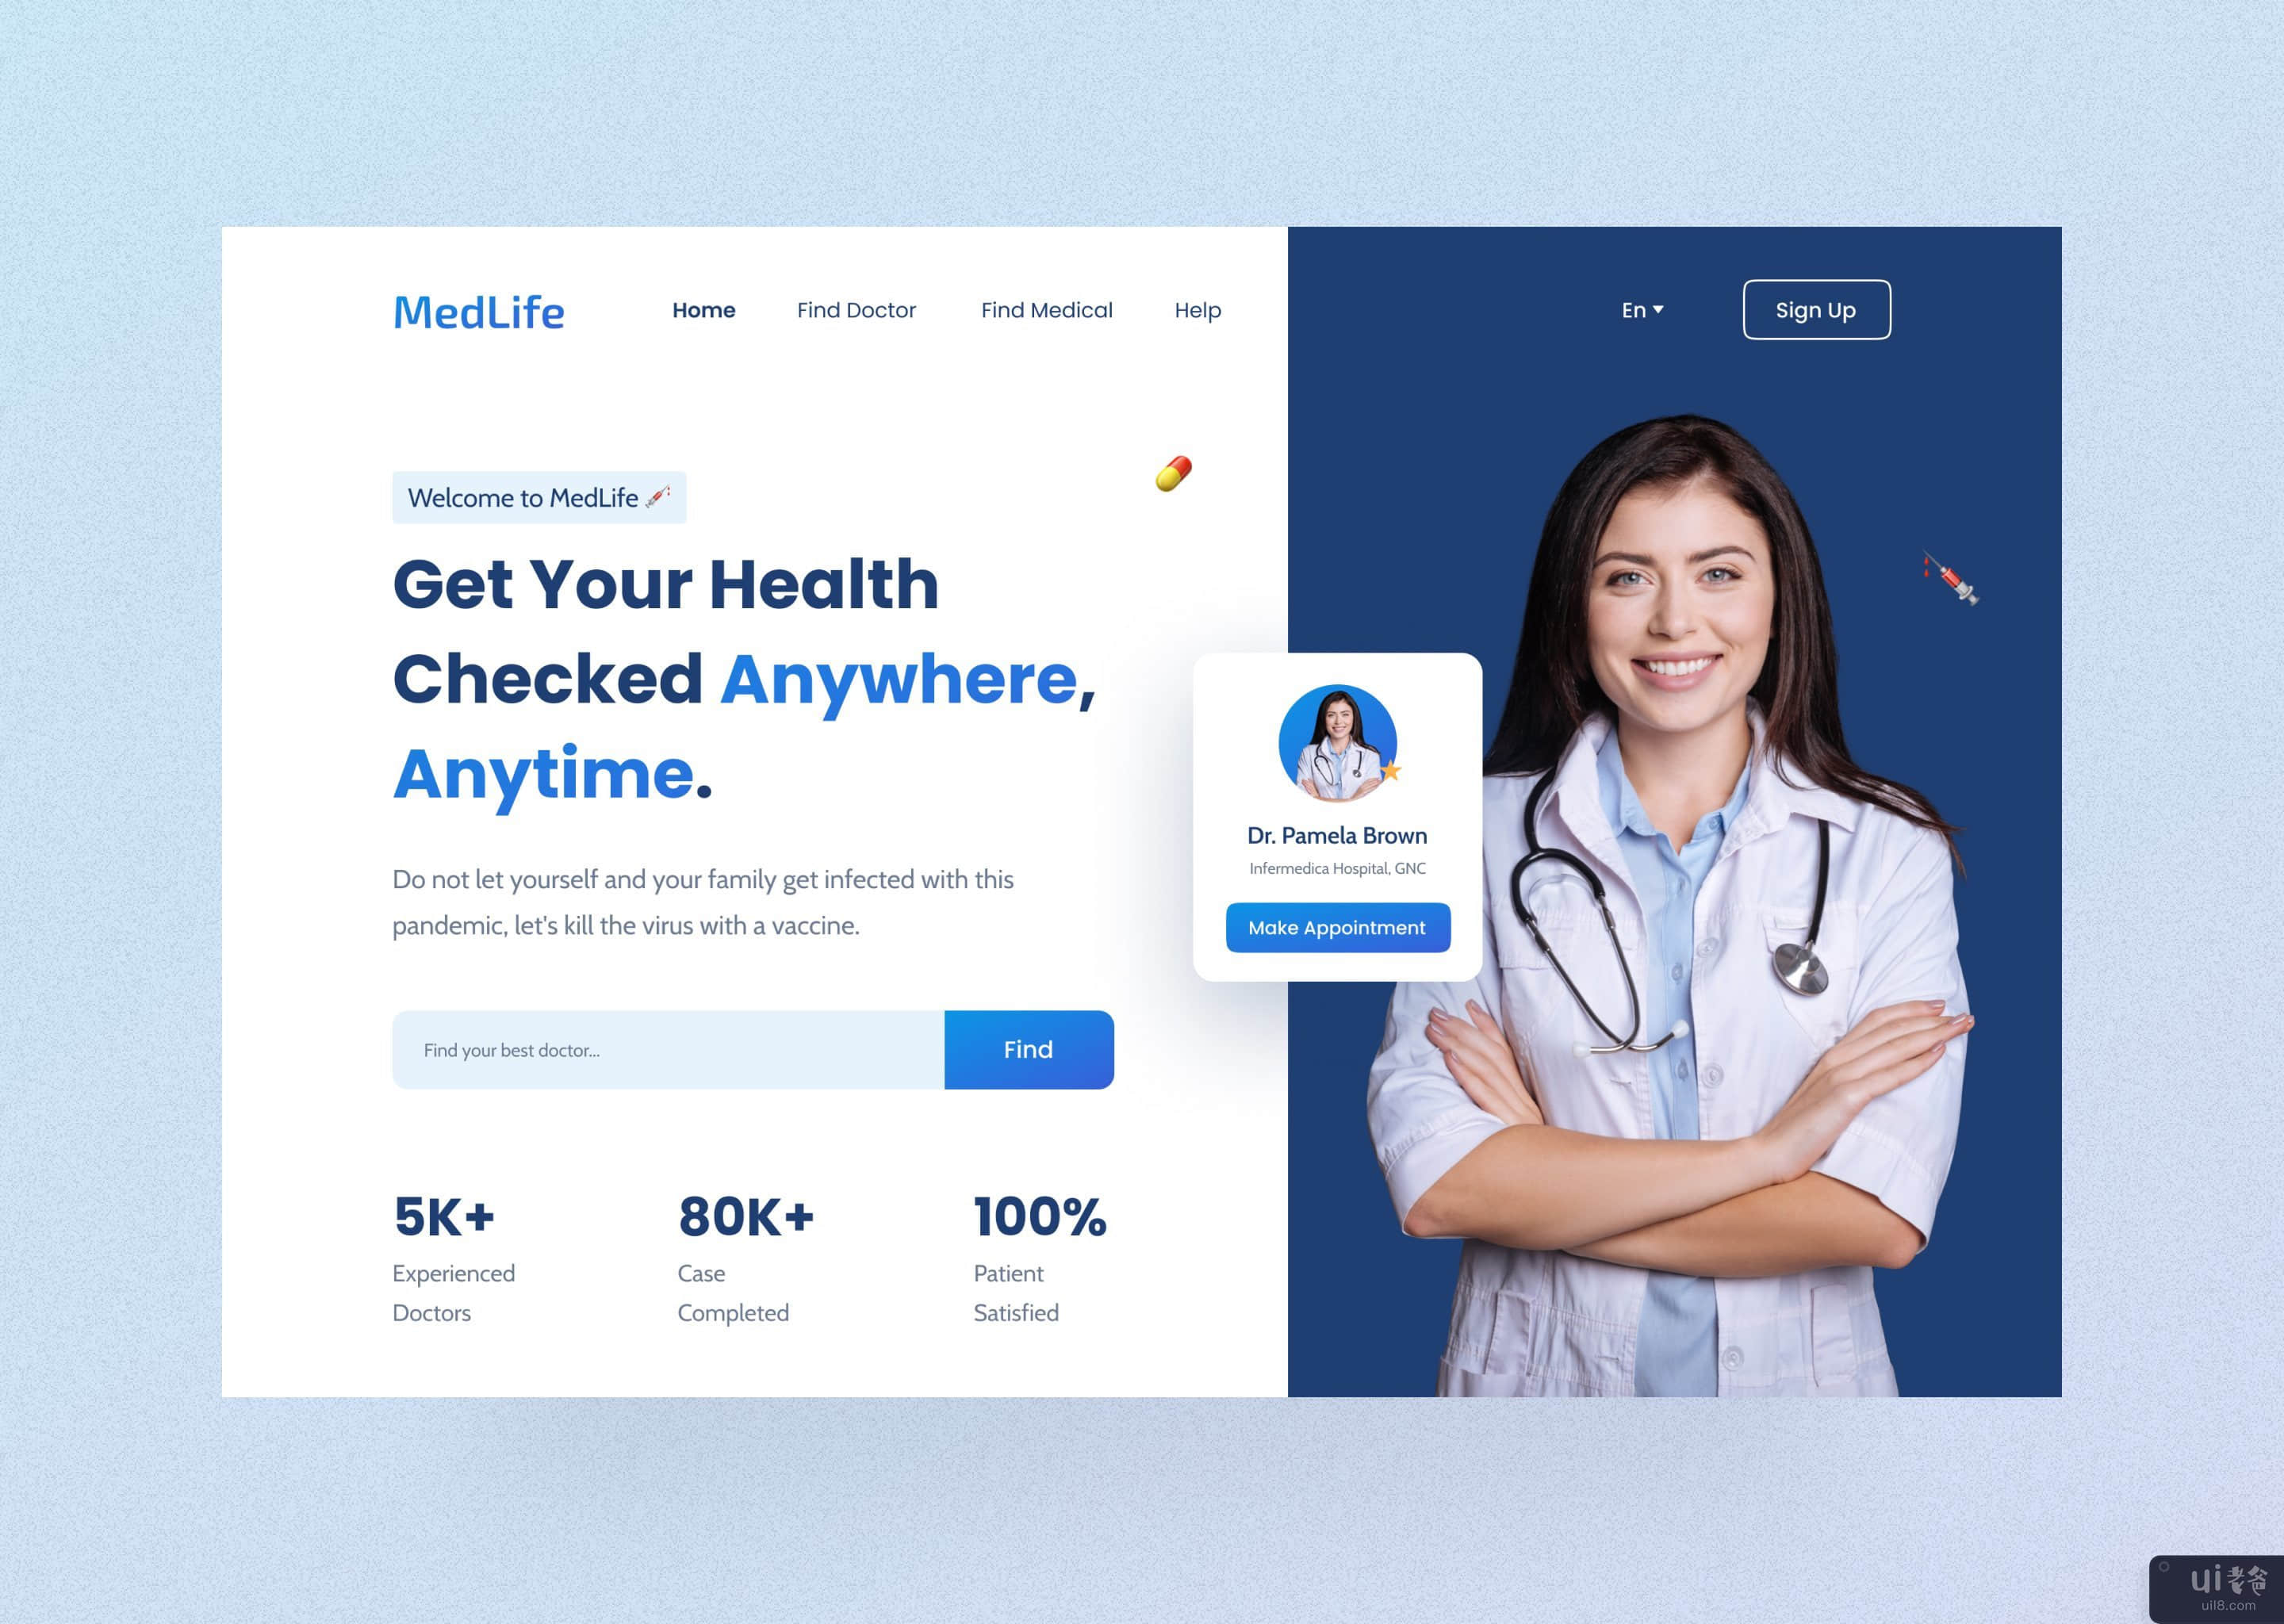 医疗 - 网站标题设计(Medical - Website Header Design)插图